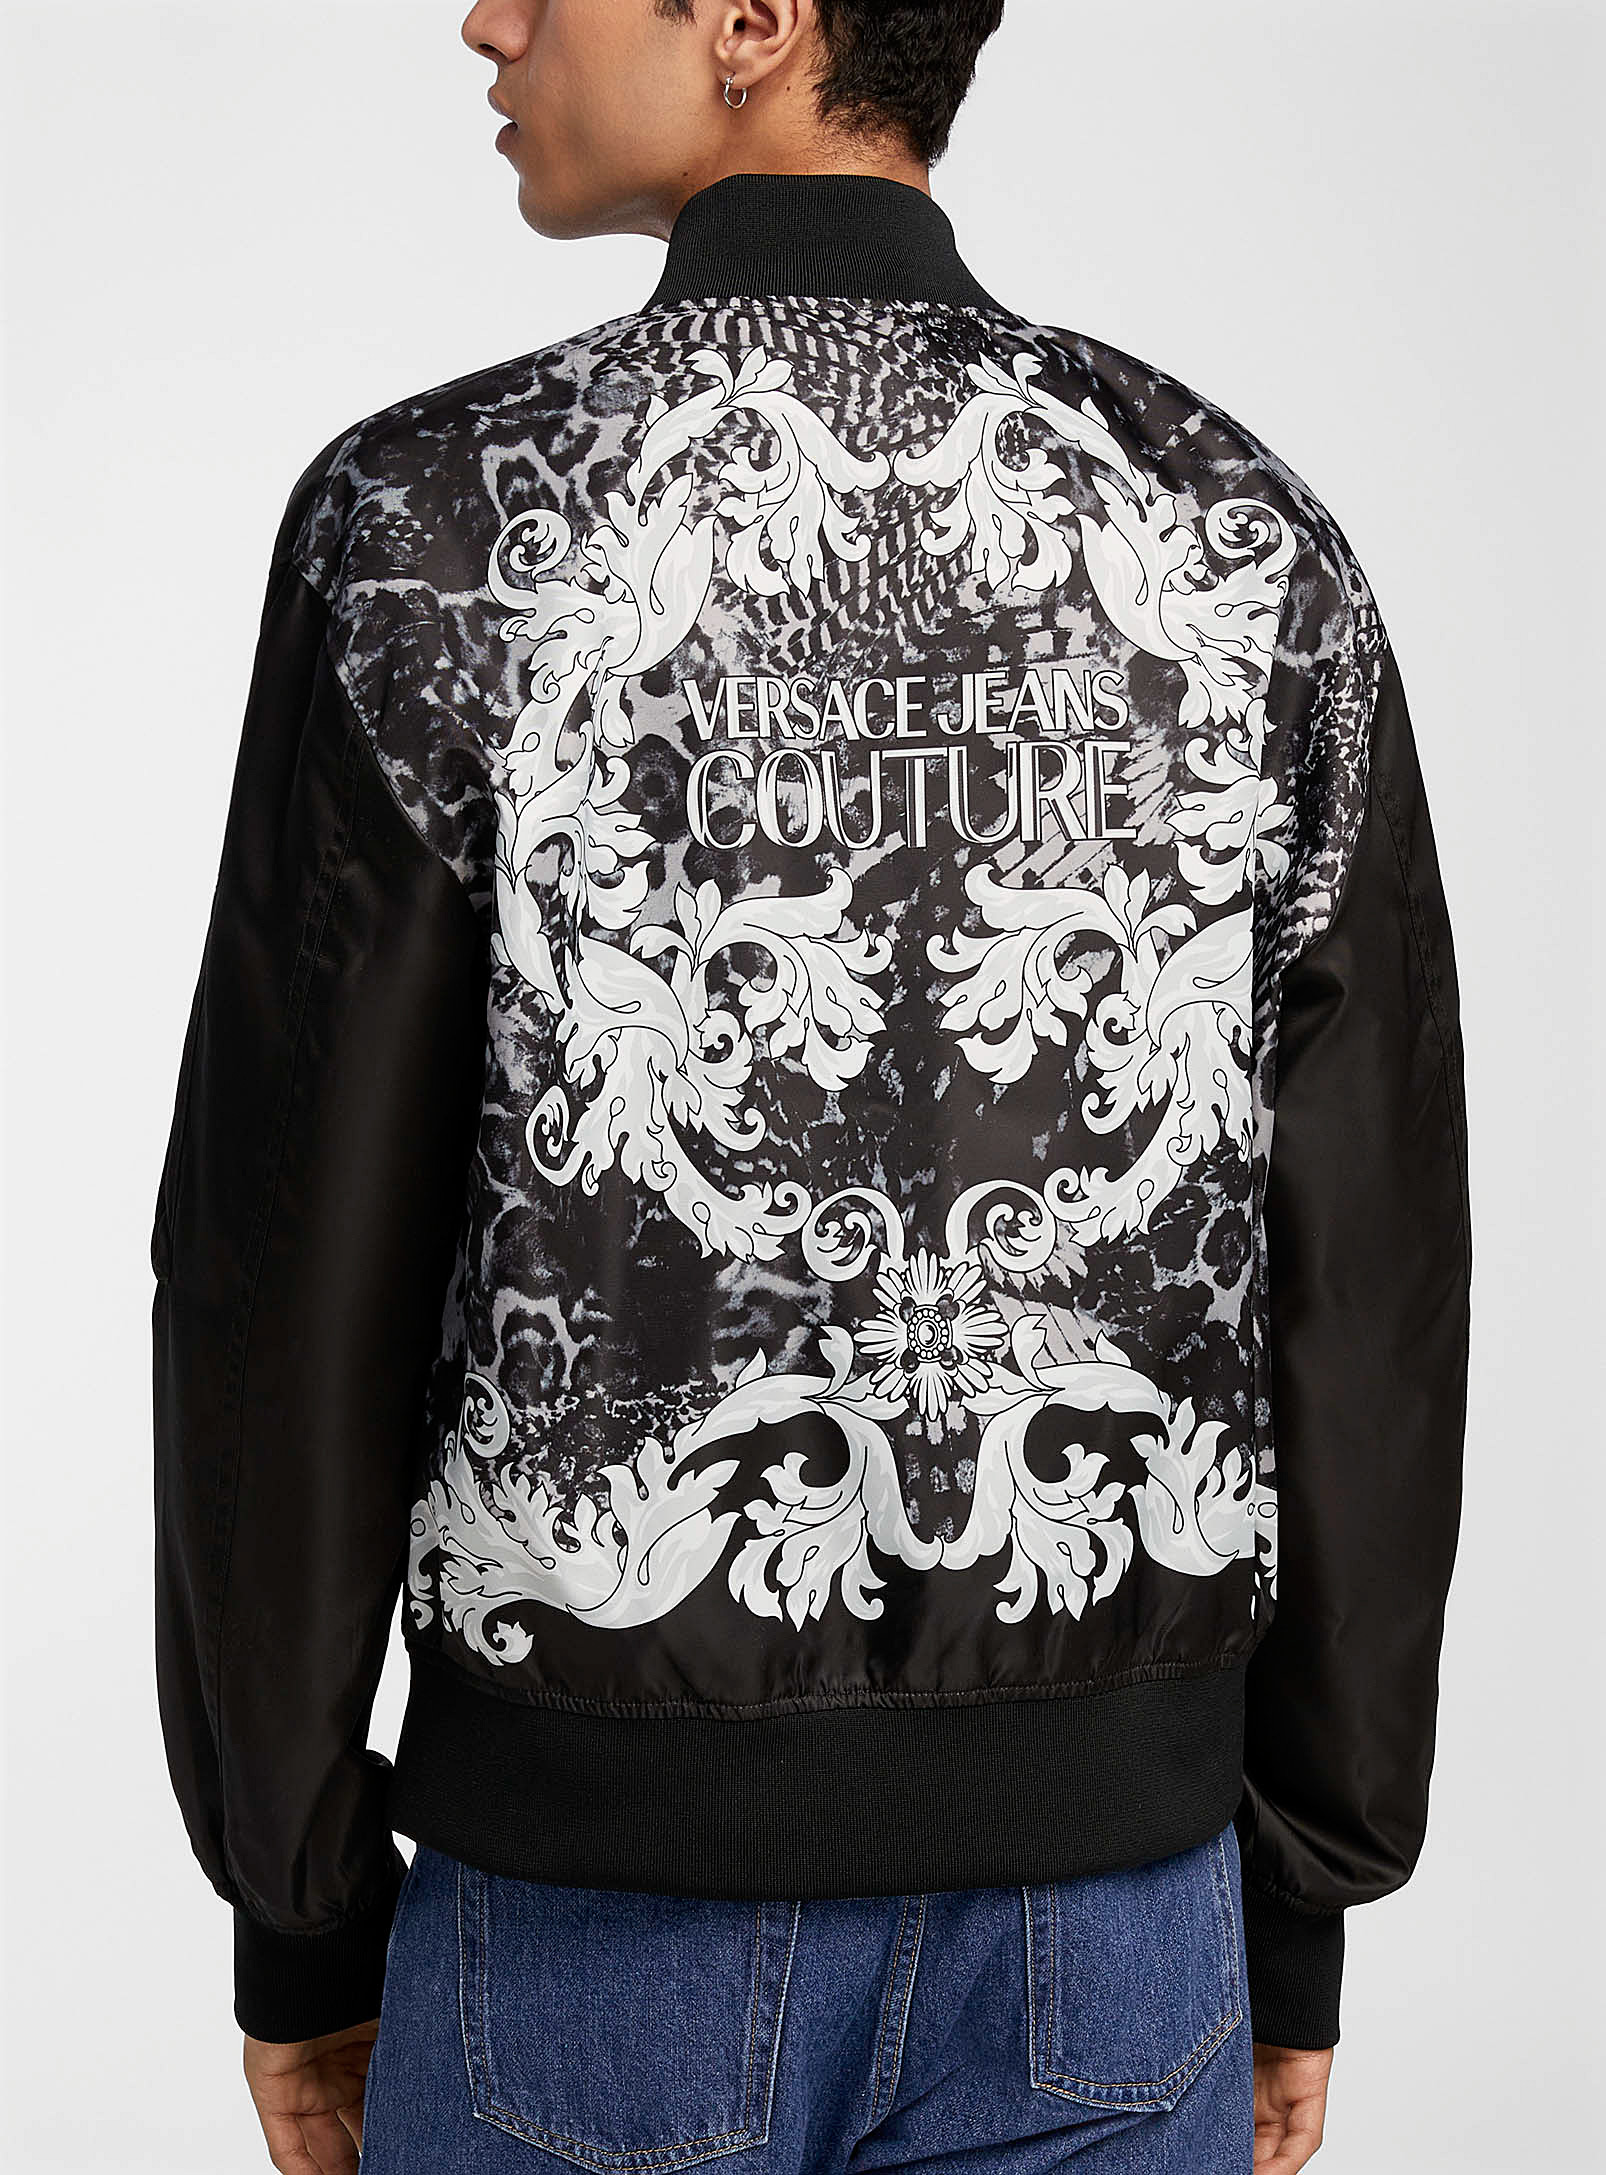 Versace Jeans Couture - Men's Back logo black bomber jacket